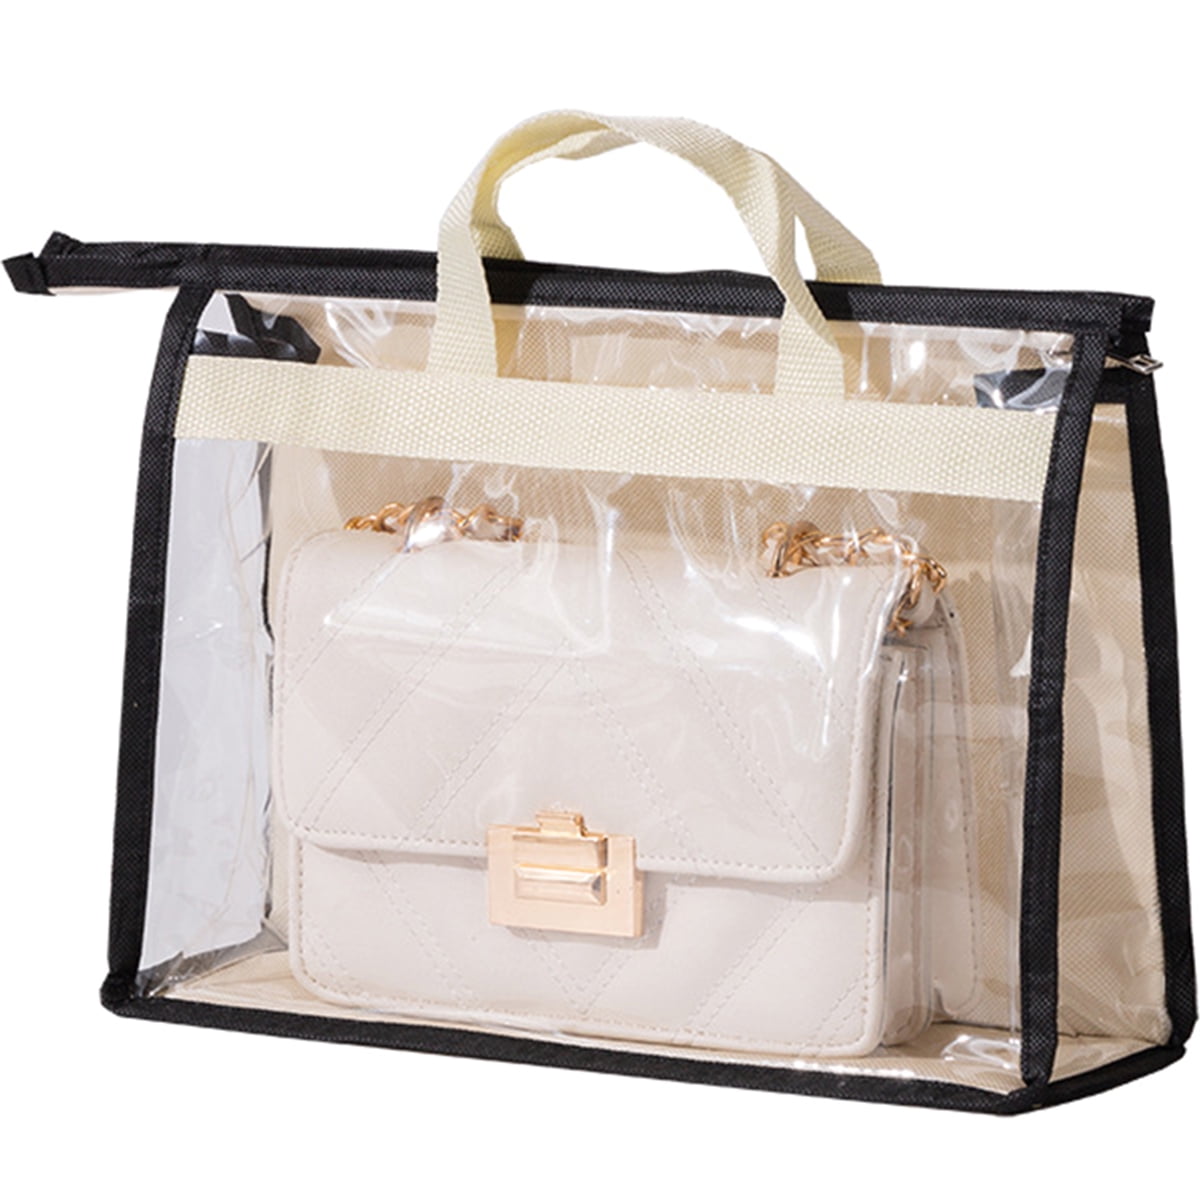 KeepItTrillminati'  Bags, Purses, Bag accessories